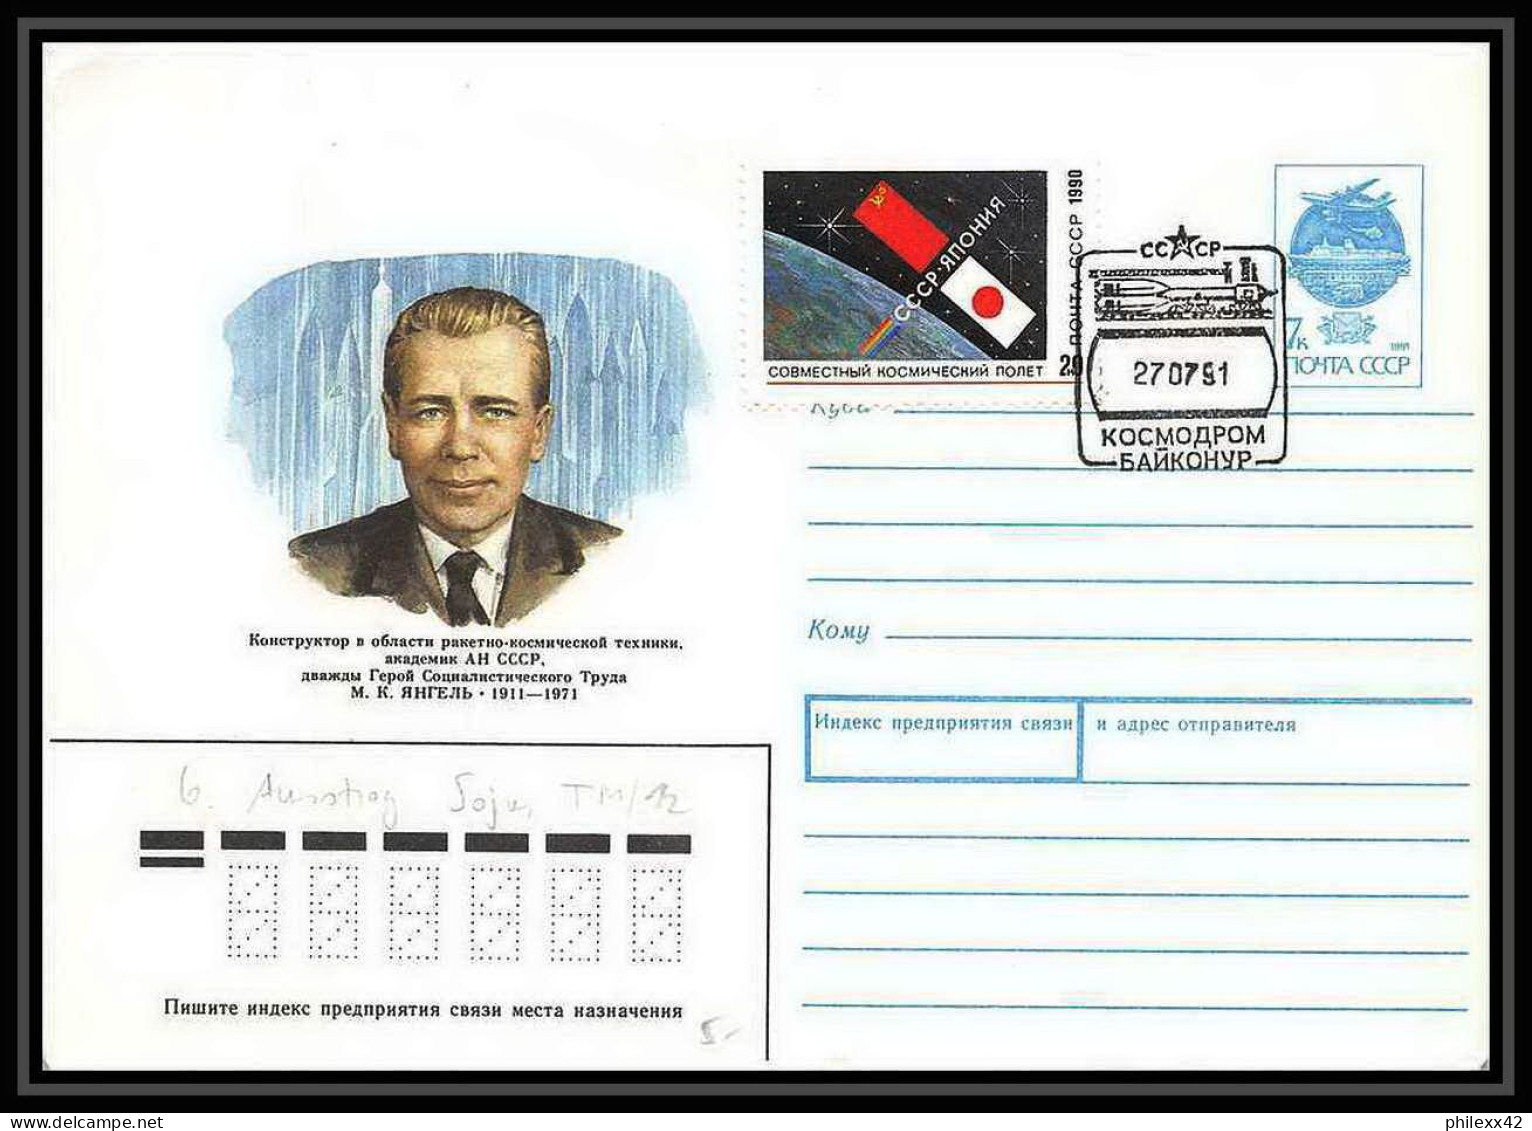 10349/ Espace (space) Entier Postal (Stamped Stationery) 27/7/1991 Soyuz (soyouz Sojus) (urss USSR) - Russie & URSS